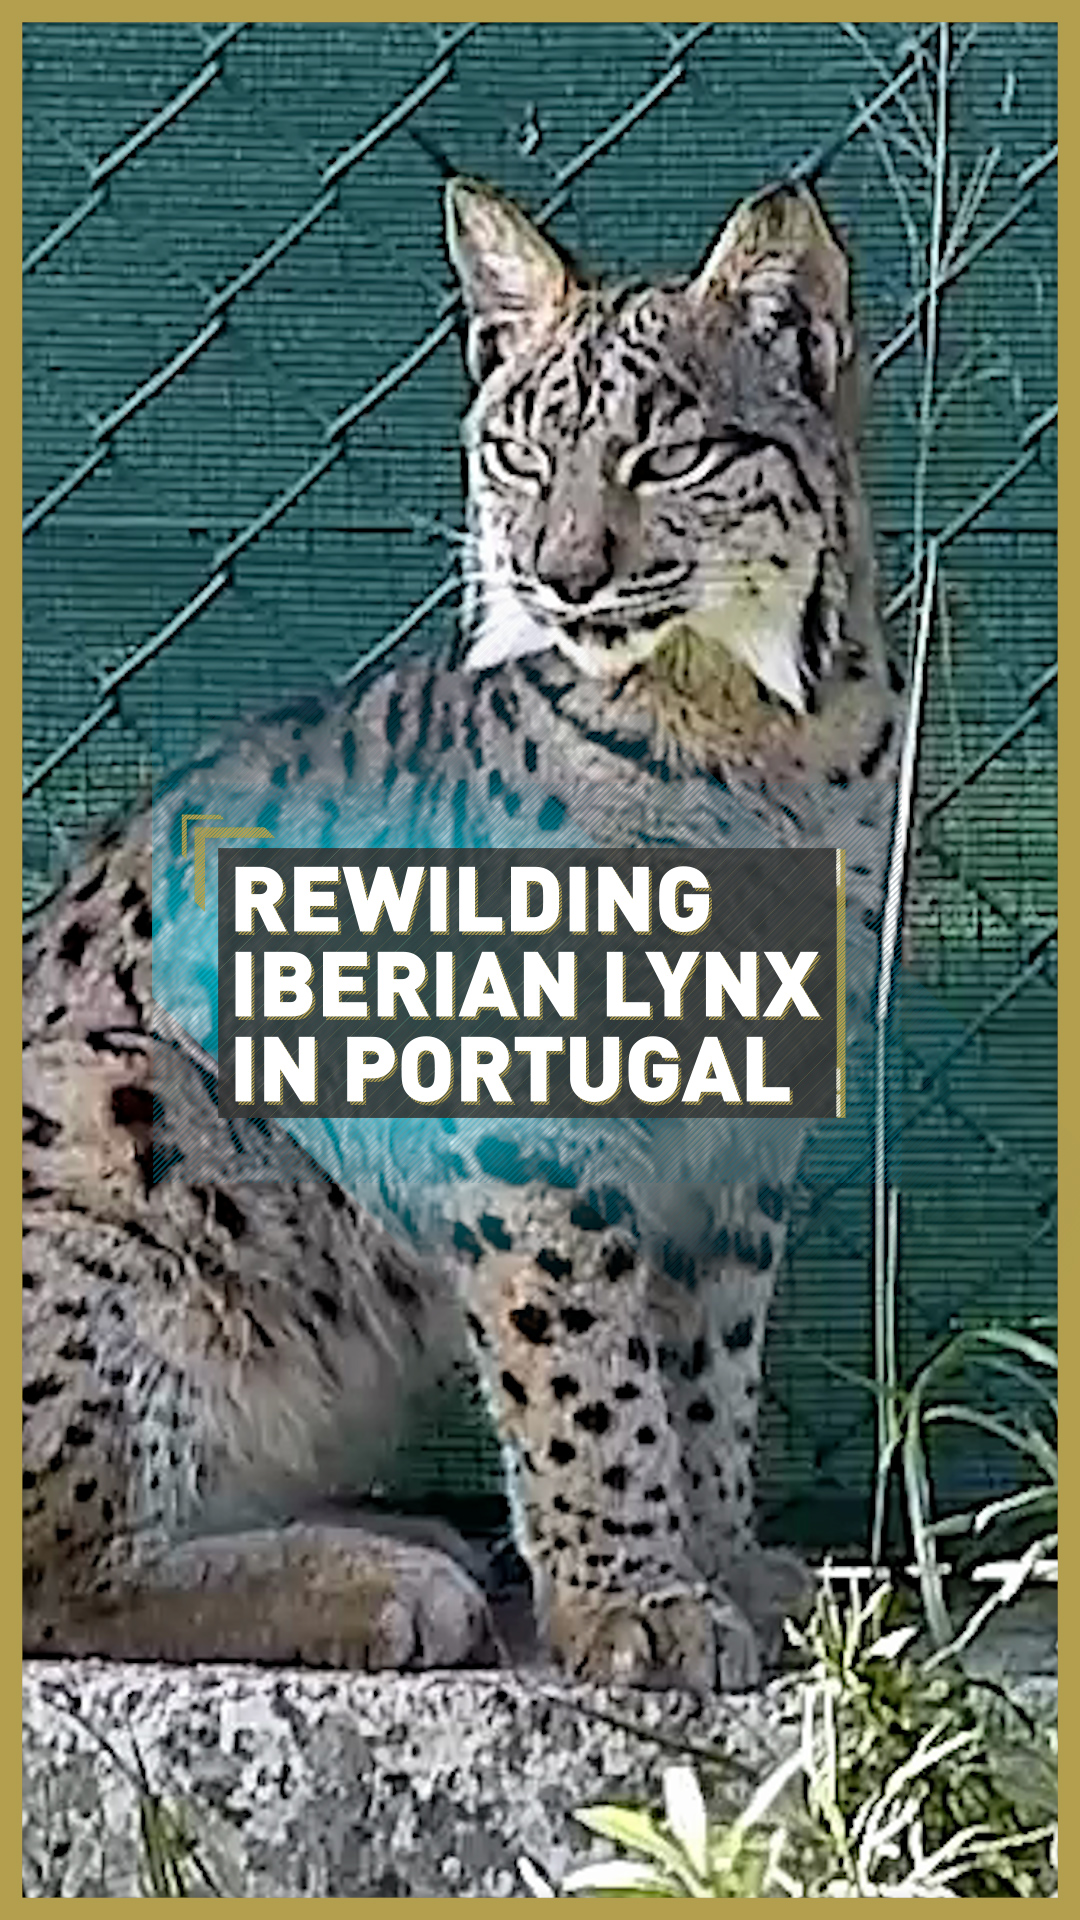 Rewilding the Iberian lynx in Portugal - CGTN